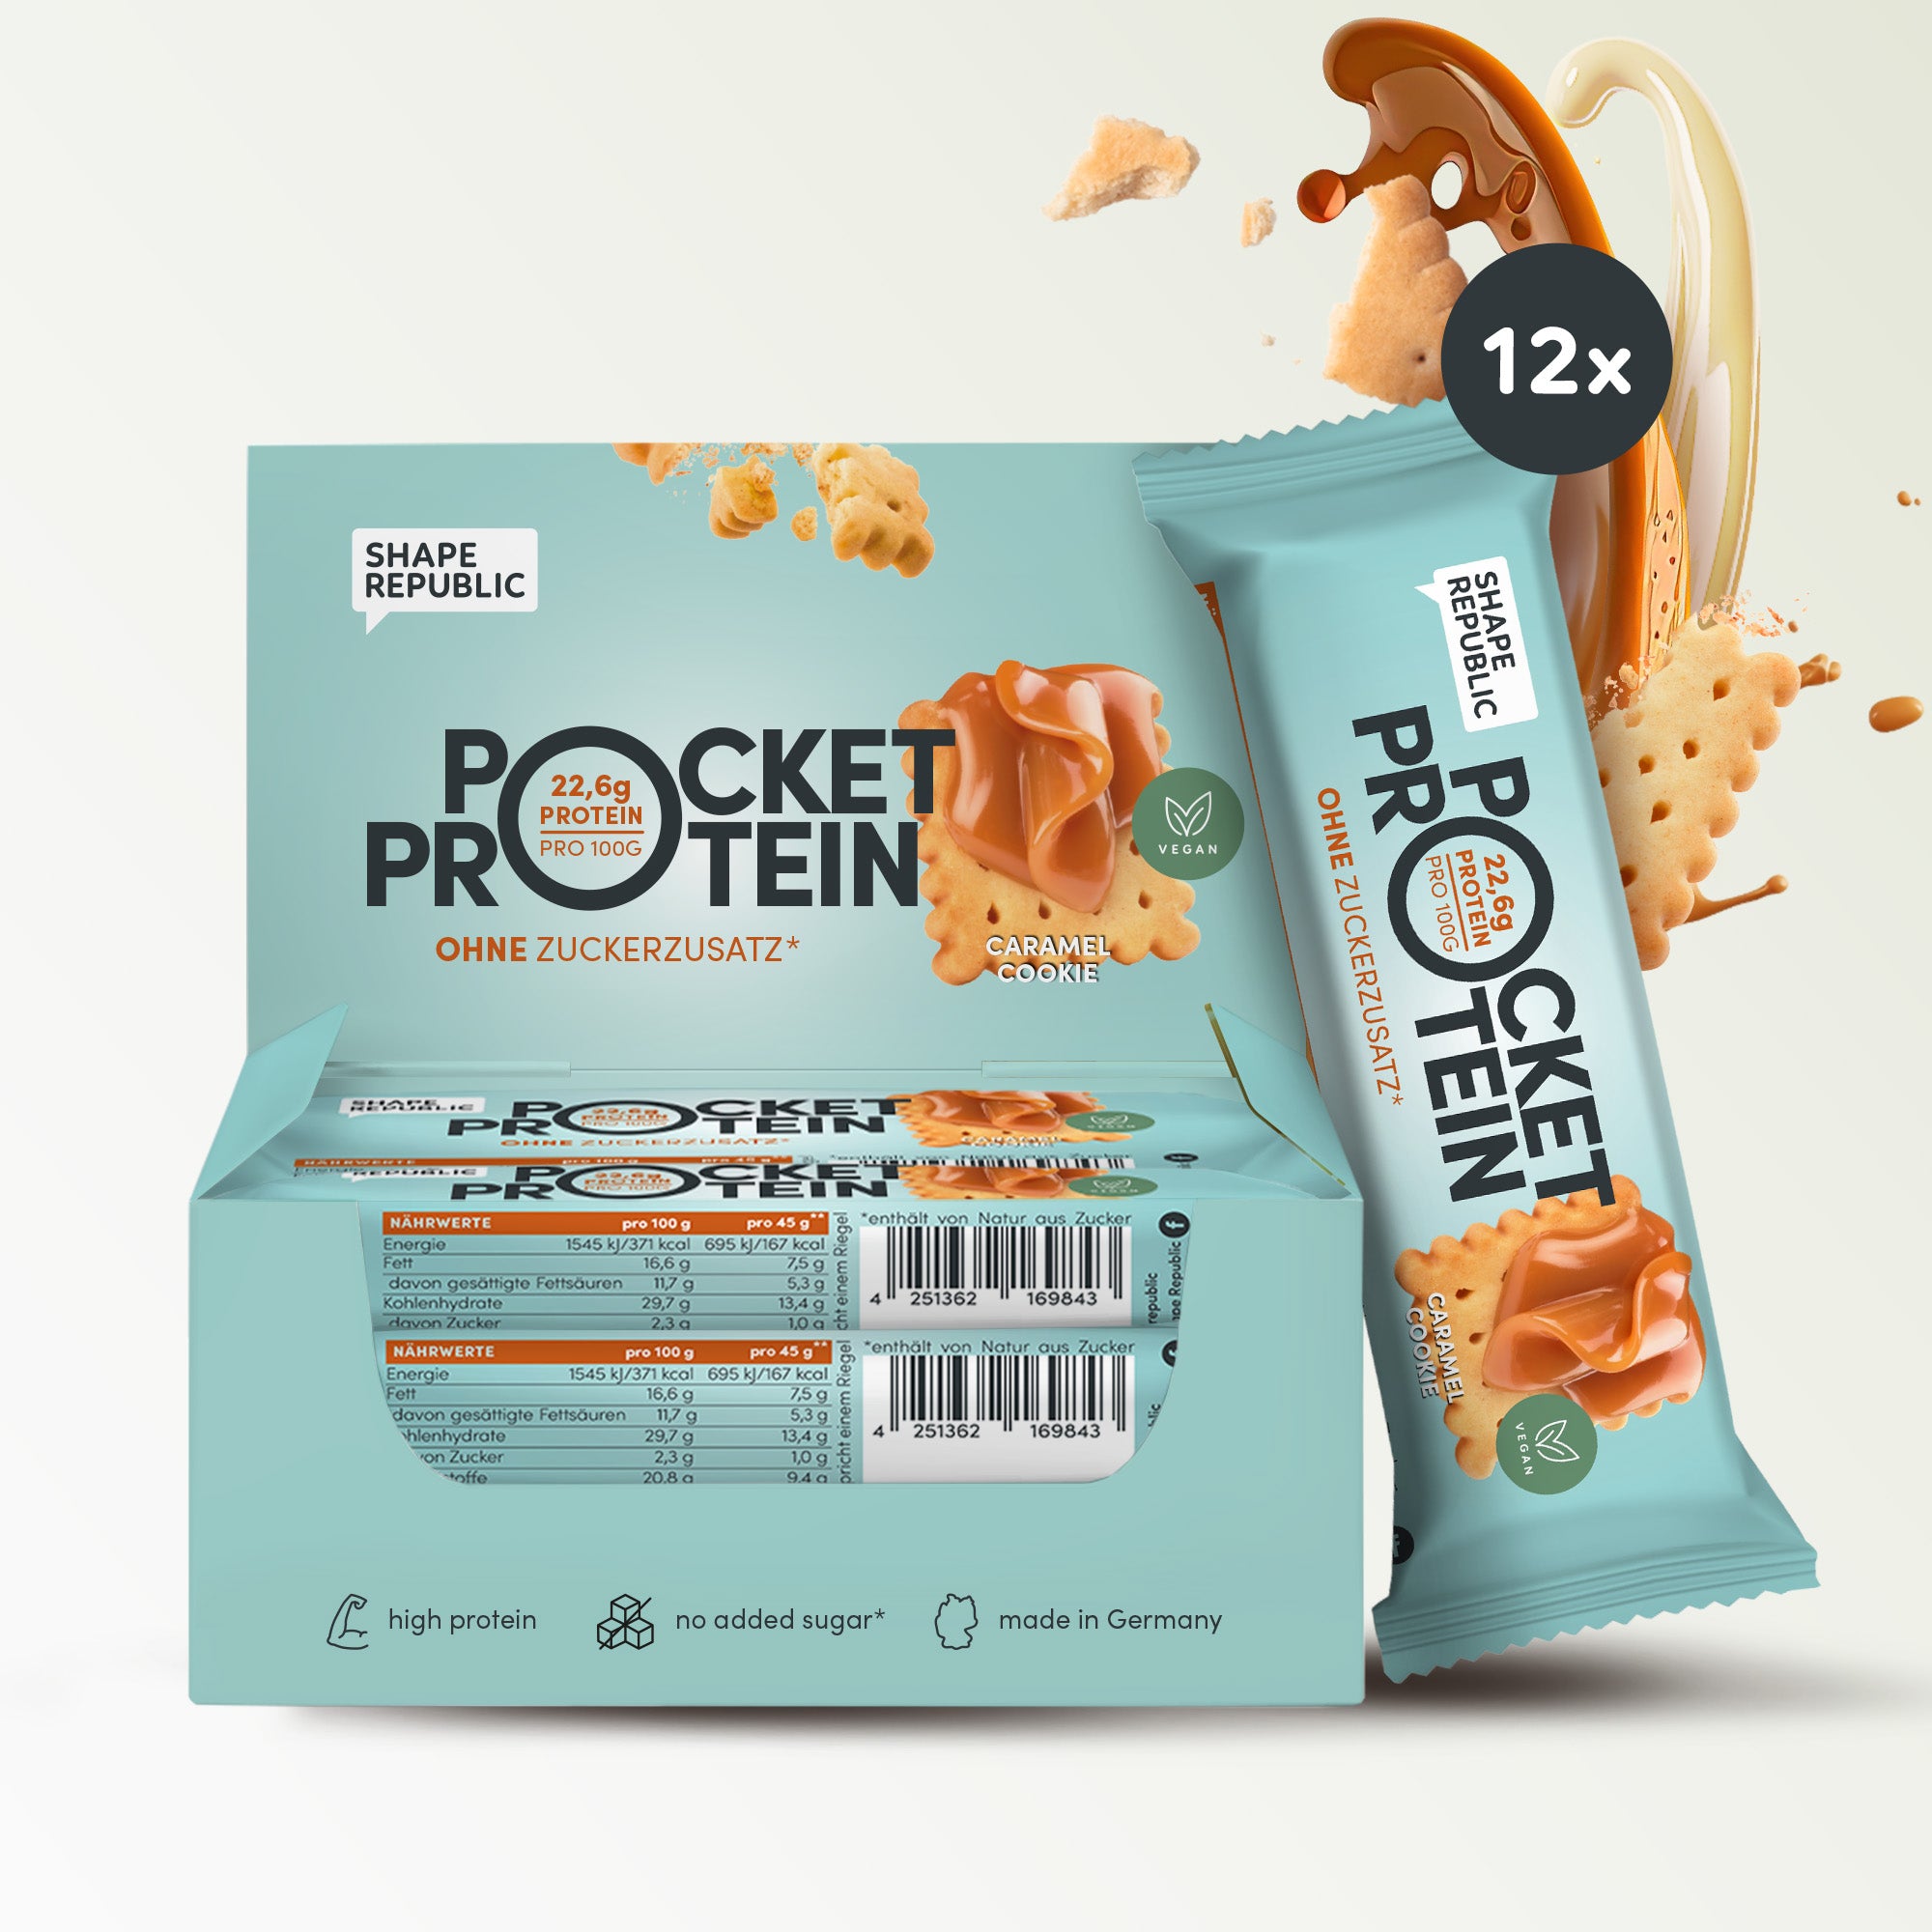 Pocket Protein Bar 12 x 45 g| Caramel Cookie| Shape Republic